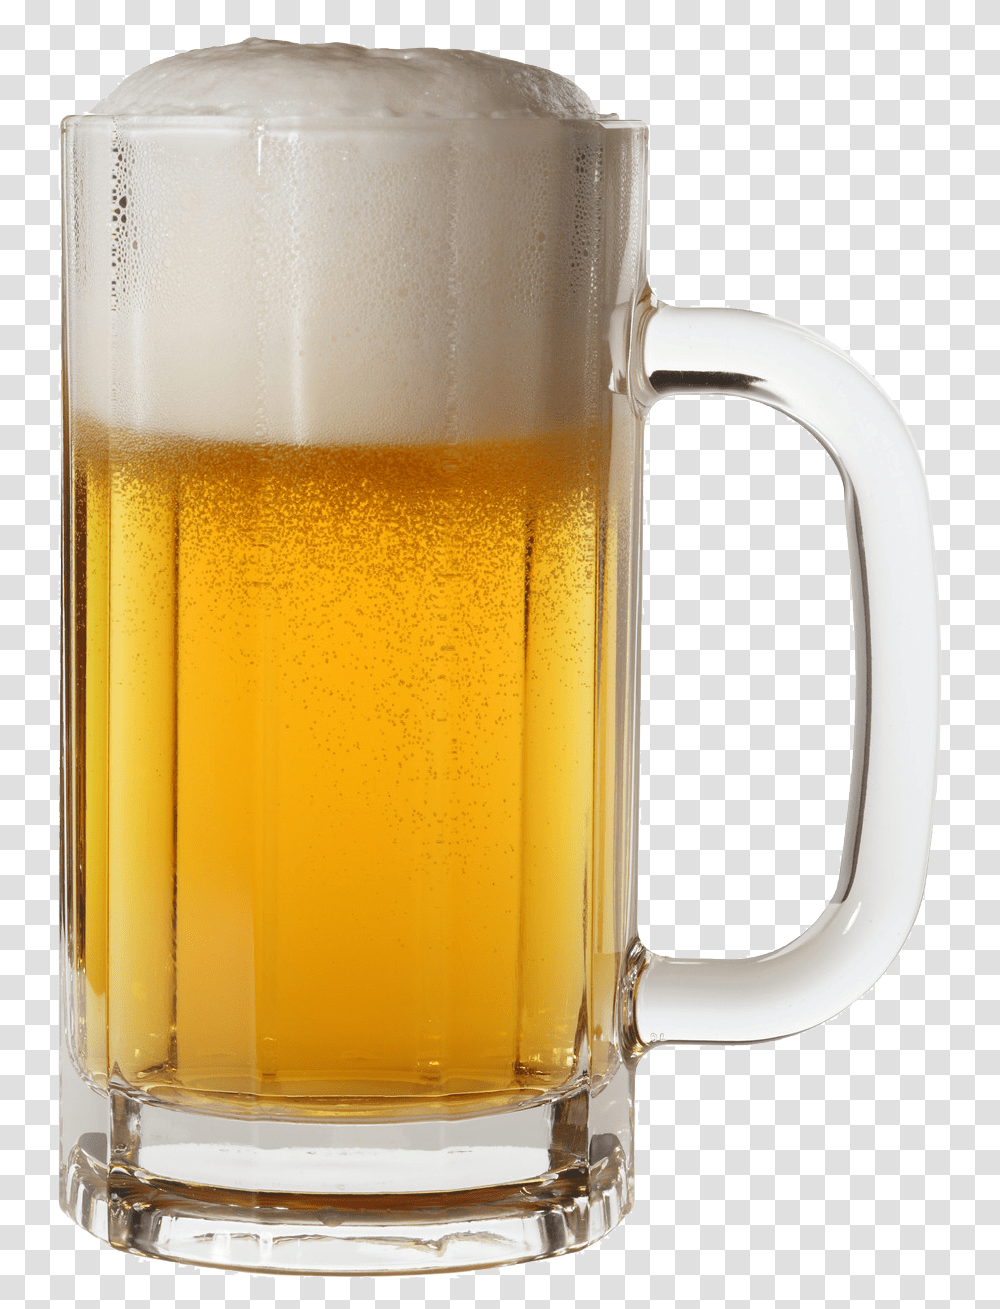 Bierglas, Glass, Stein, Jug, Beer Glass Transparent Png